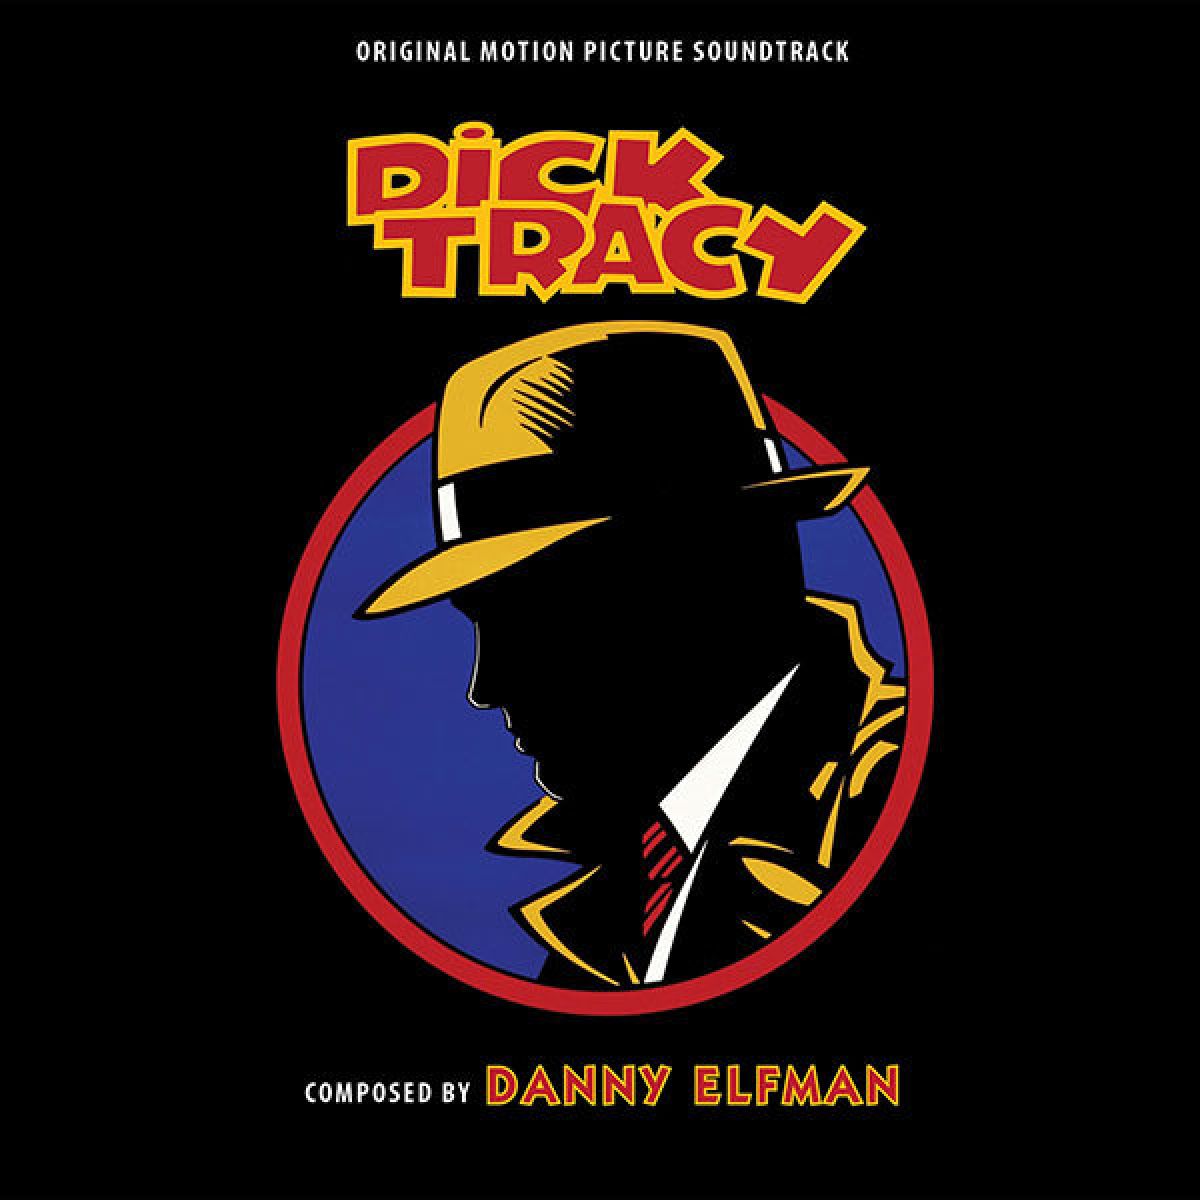 Dick tracy 2 disc soundtrack intrada